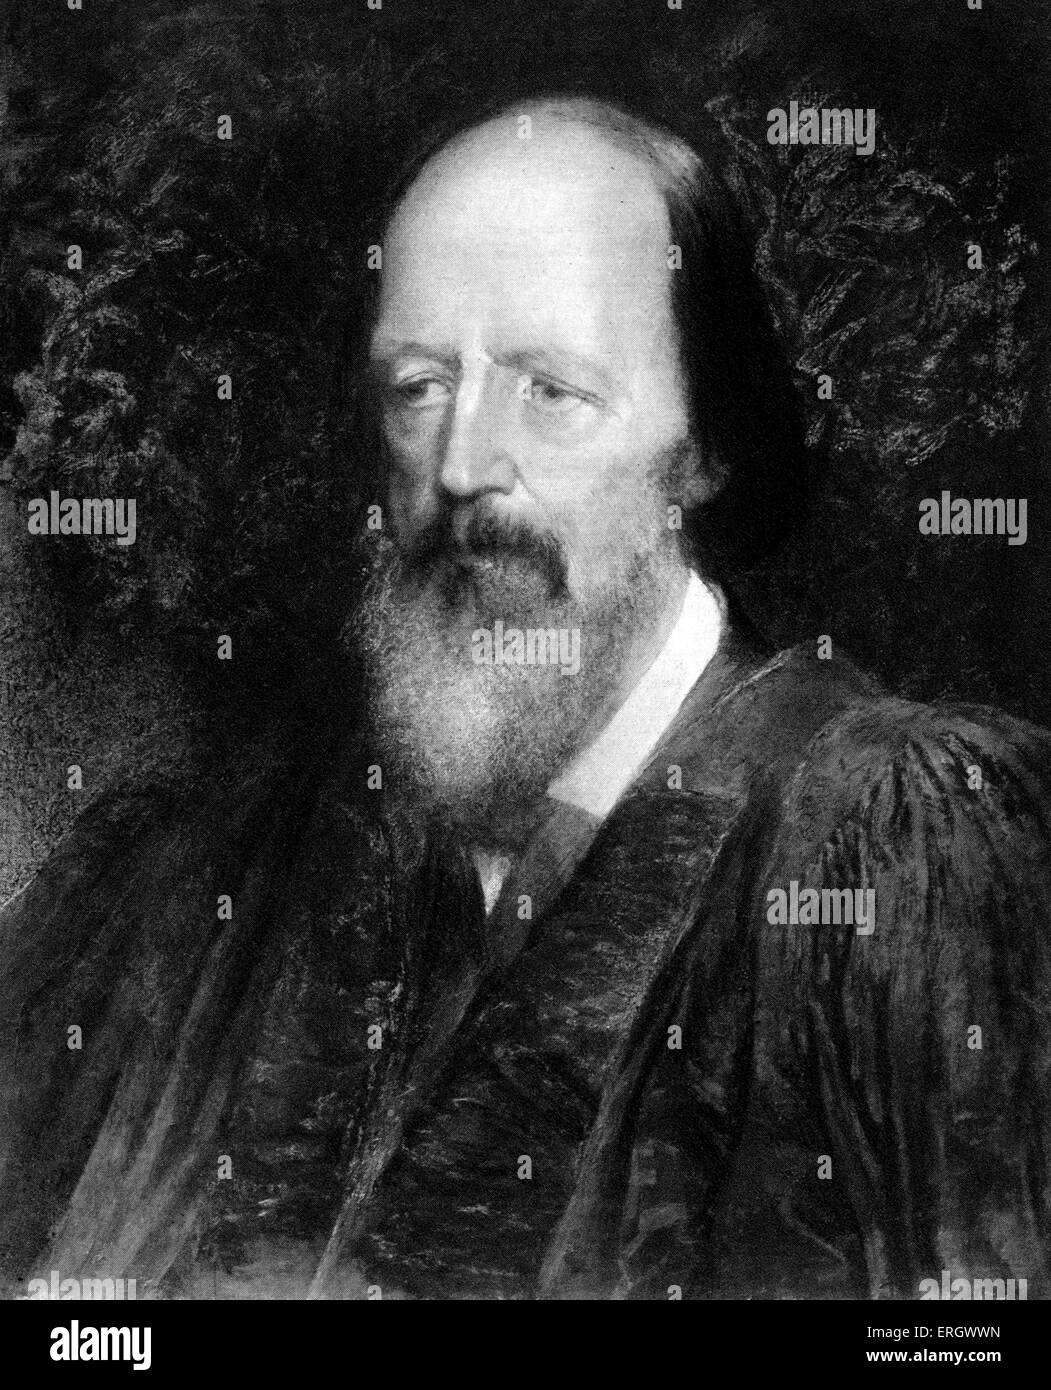 Alfred Lord Tennyson - retrato. Laureado poeta inglés. 1809-1892. popular poeta Victoriano. Autor de la Dama de Shallott. Foto de stock